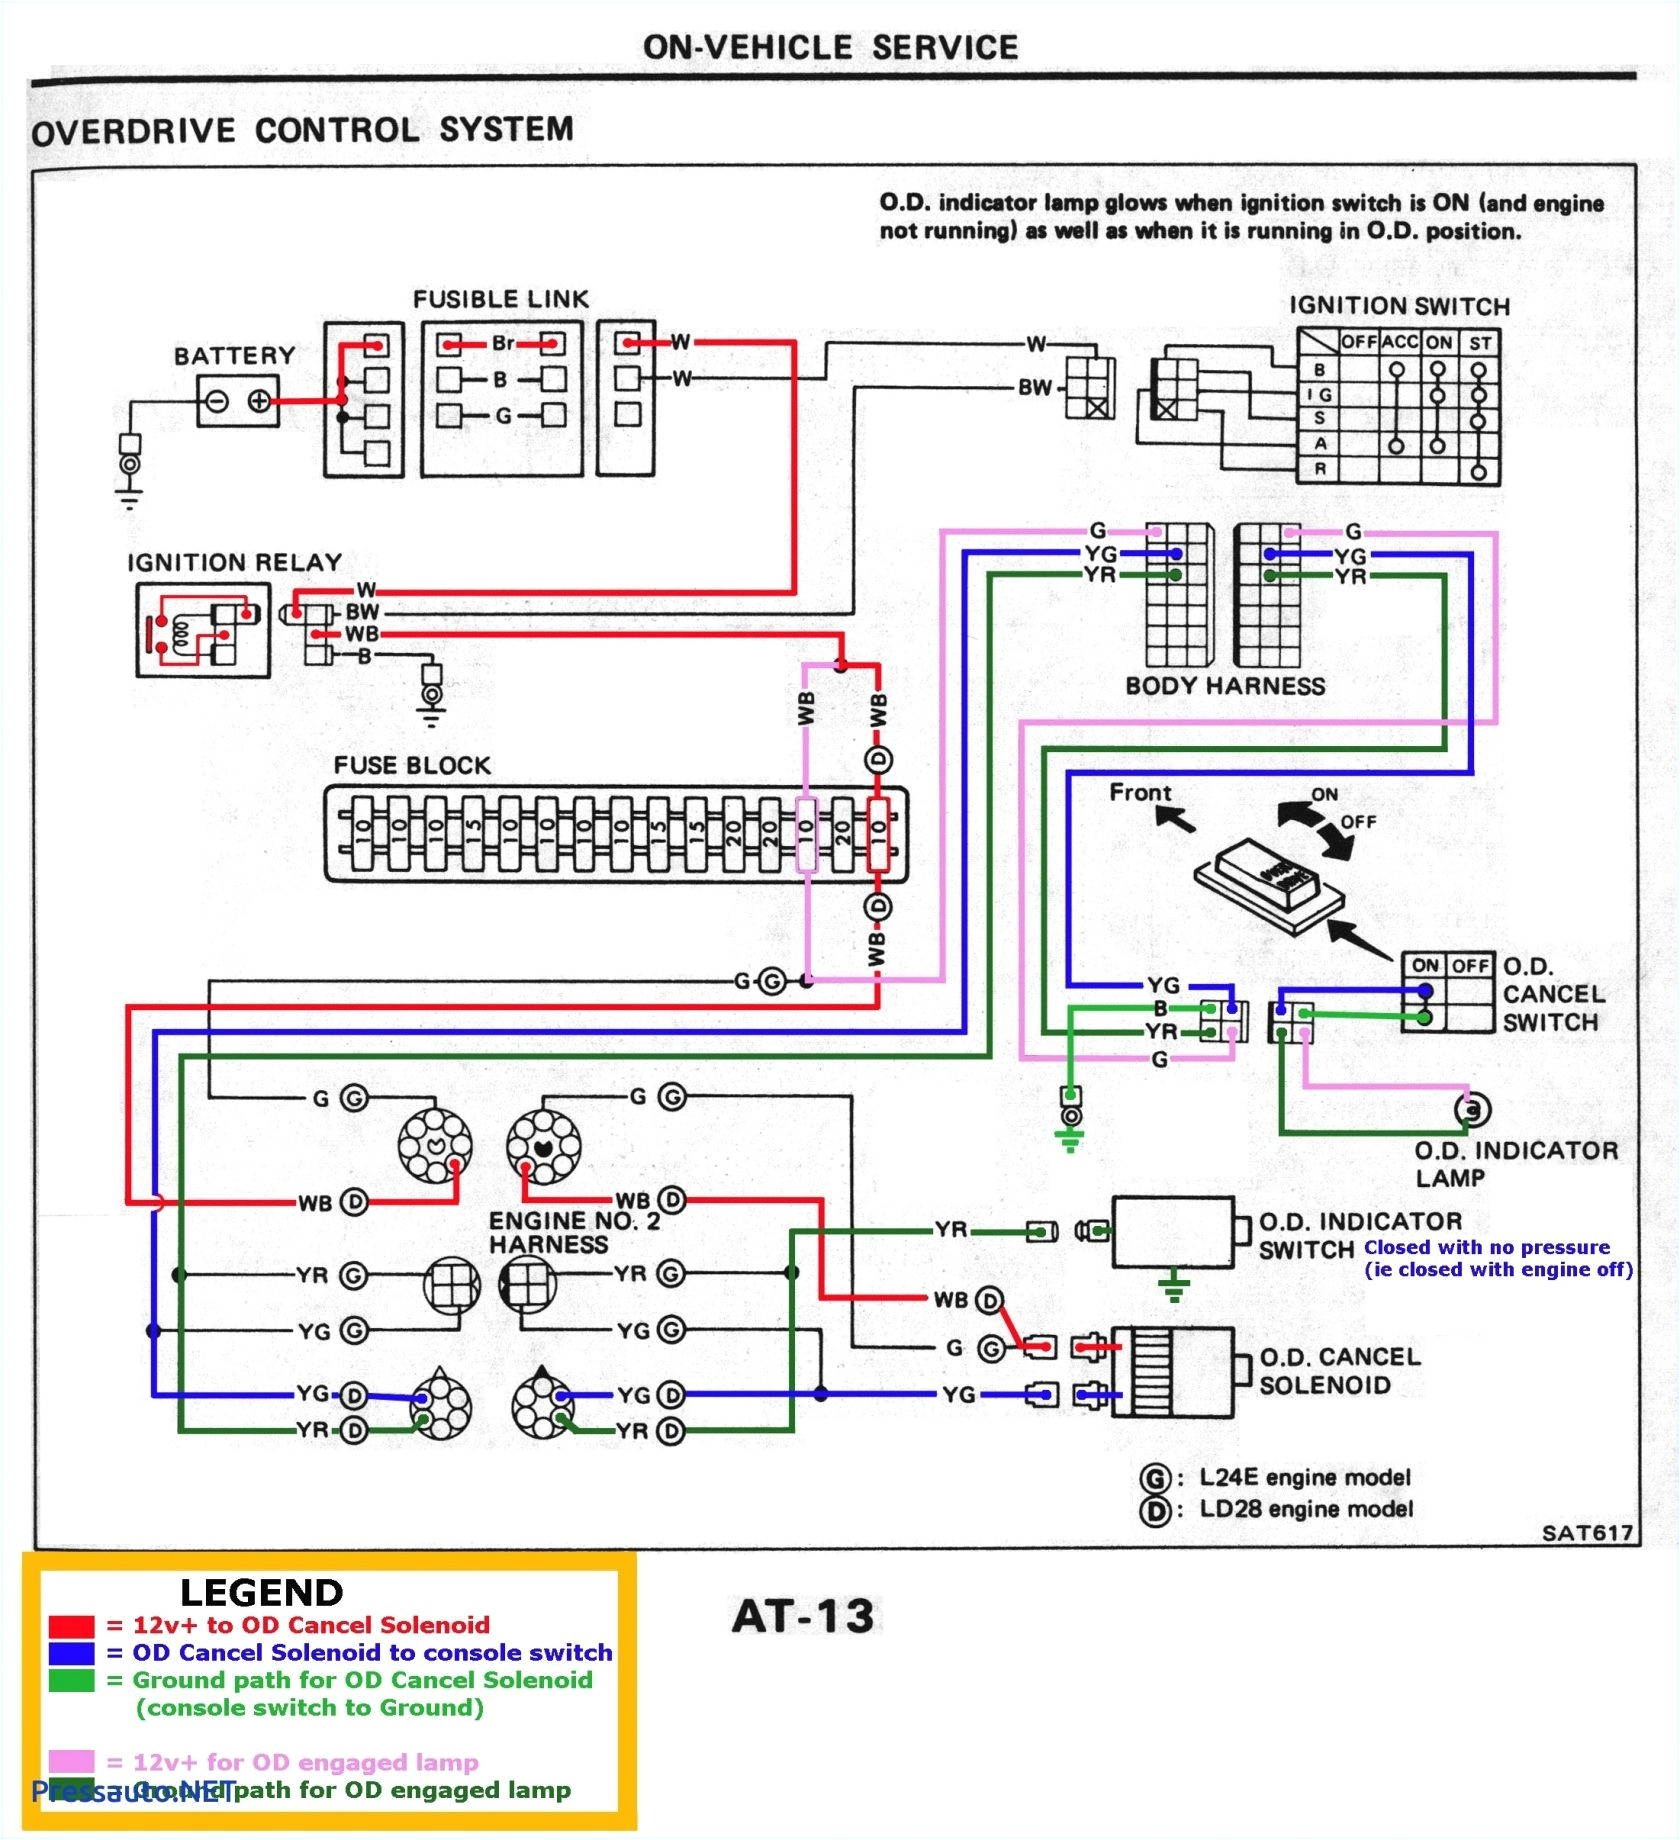 wiring diagram for murray riding lawn mower solenoid wiring diagram for yardman riding mower refrence wiring diagram 8c jpg